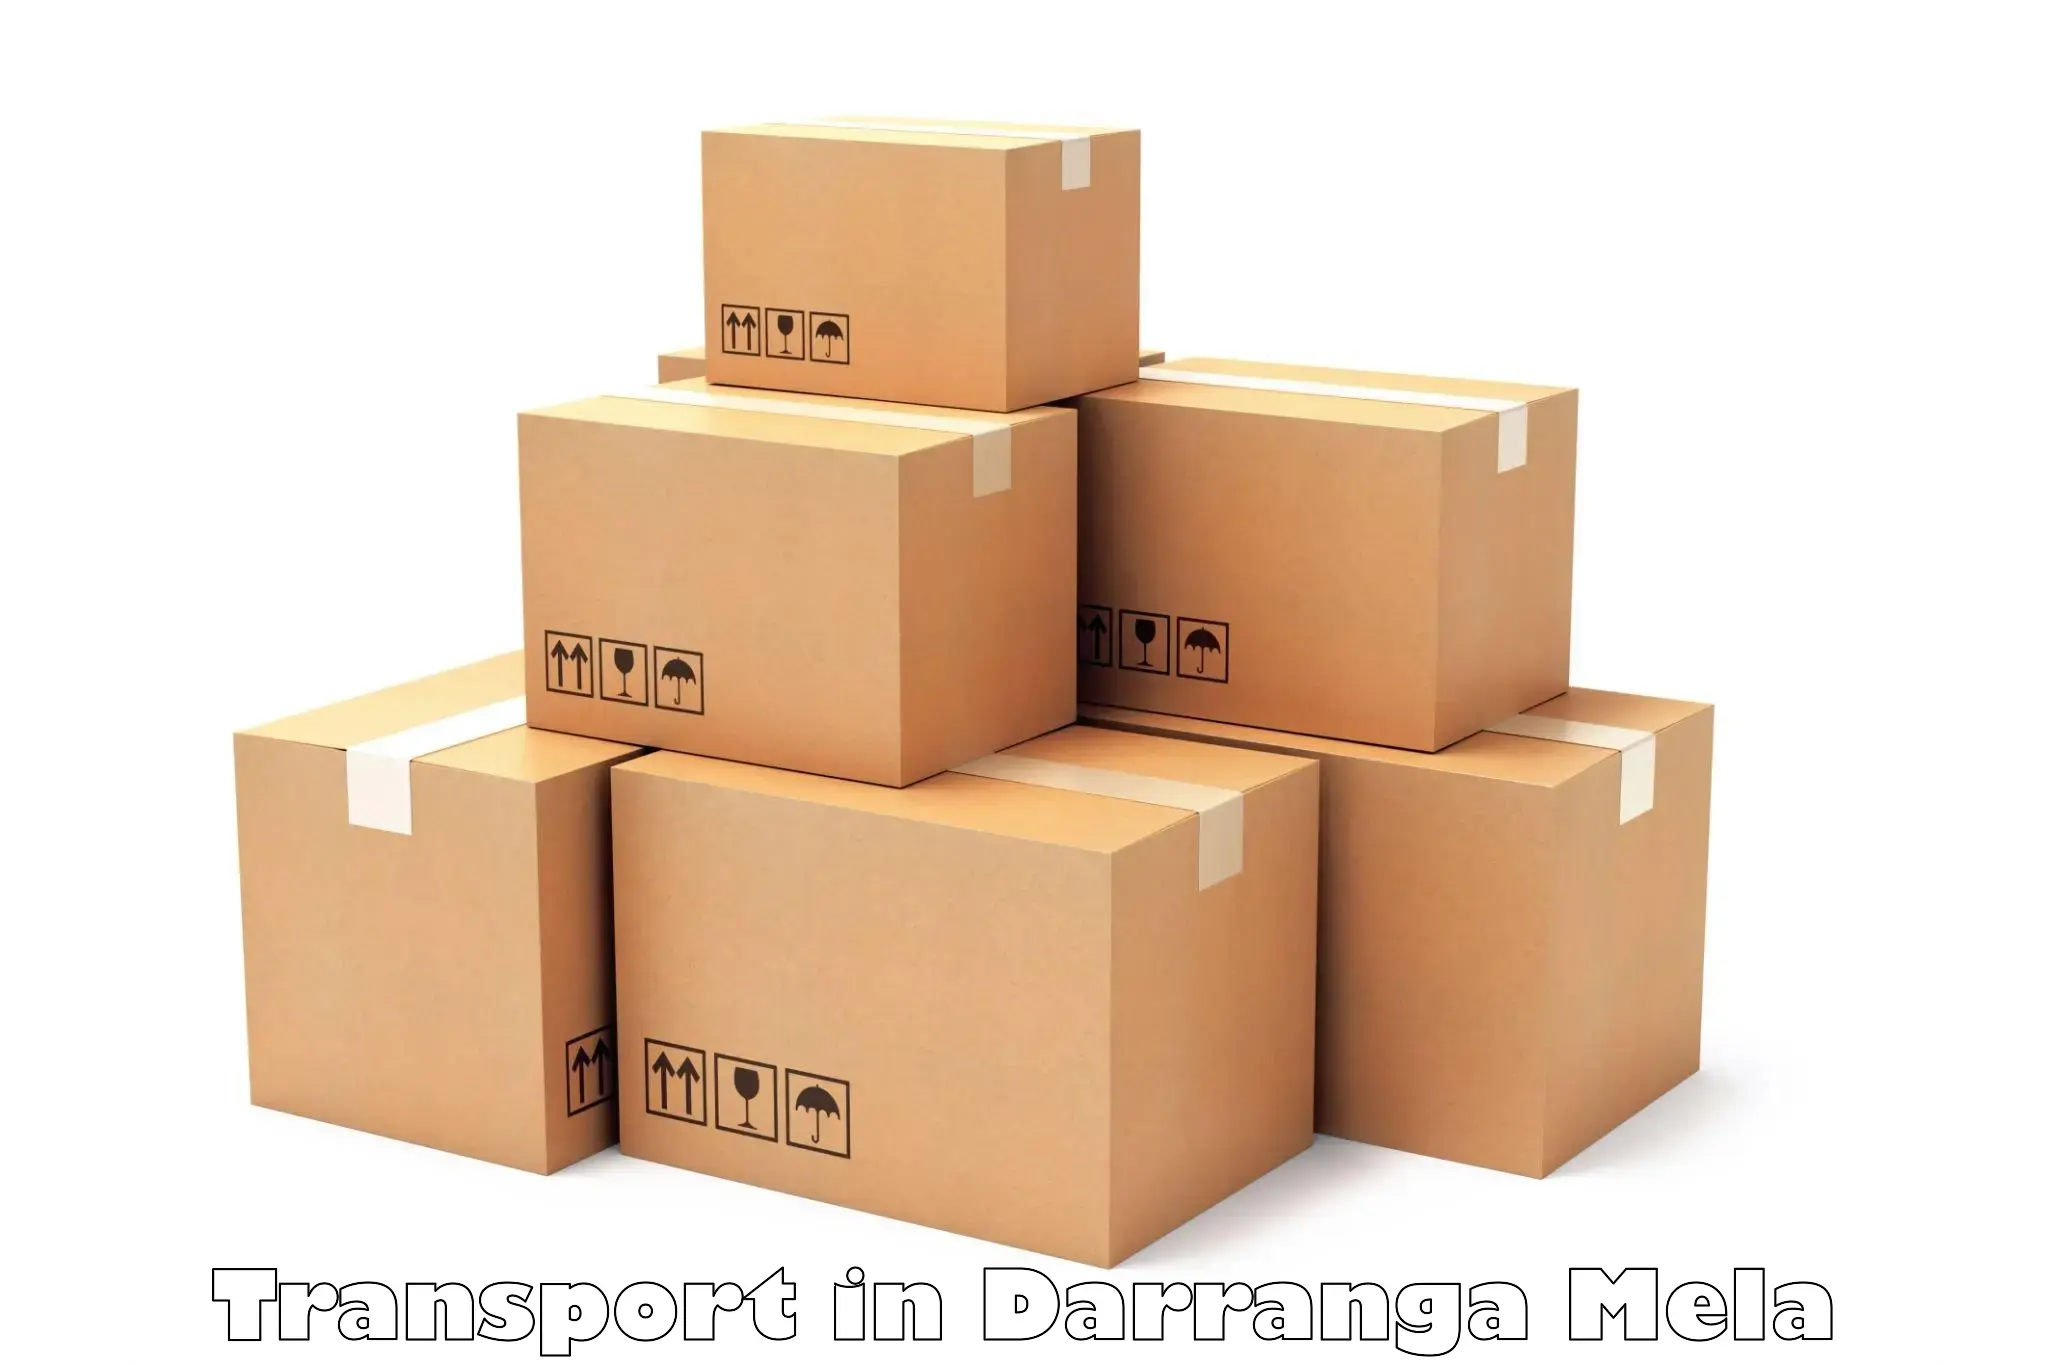 Furniture transport service in Darranga Mela